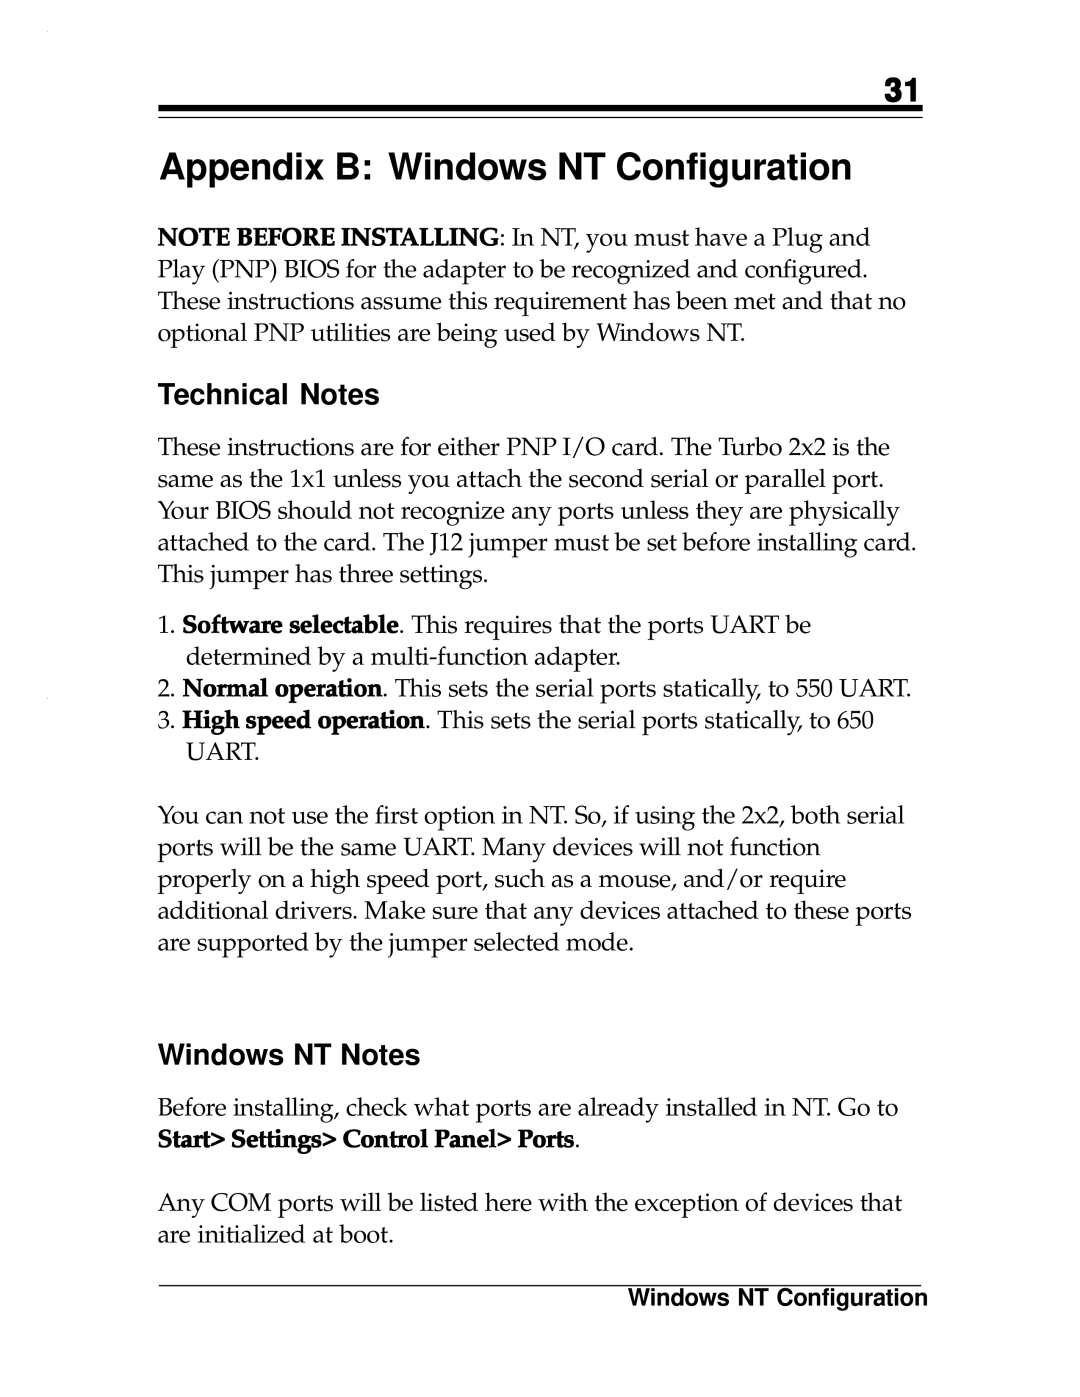 Boca Research 2x2, Turbo1x1 manual Appendix B Windows NT Configuration, Technical Notes, Windows NT Notes 